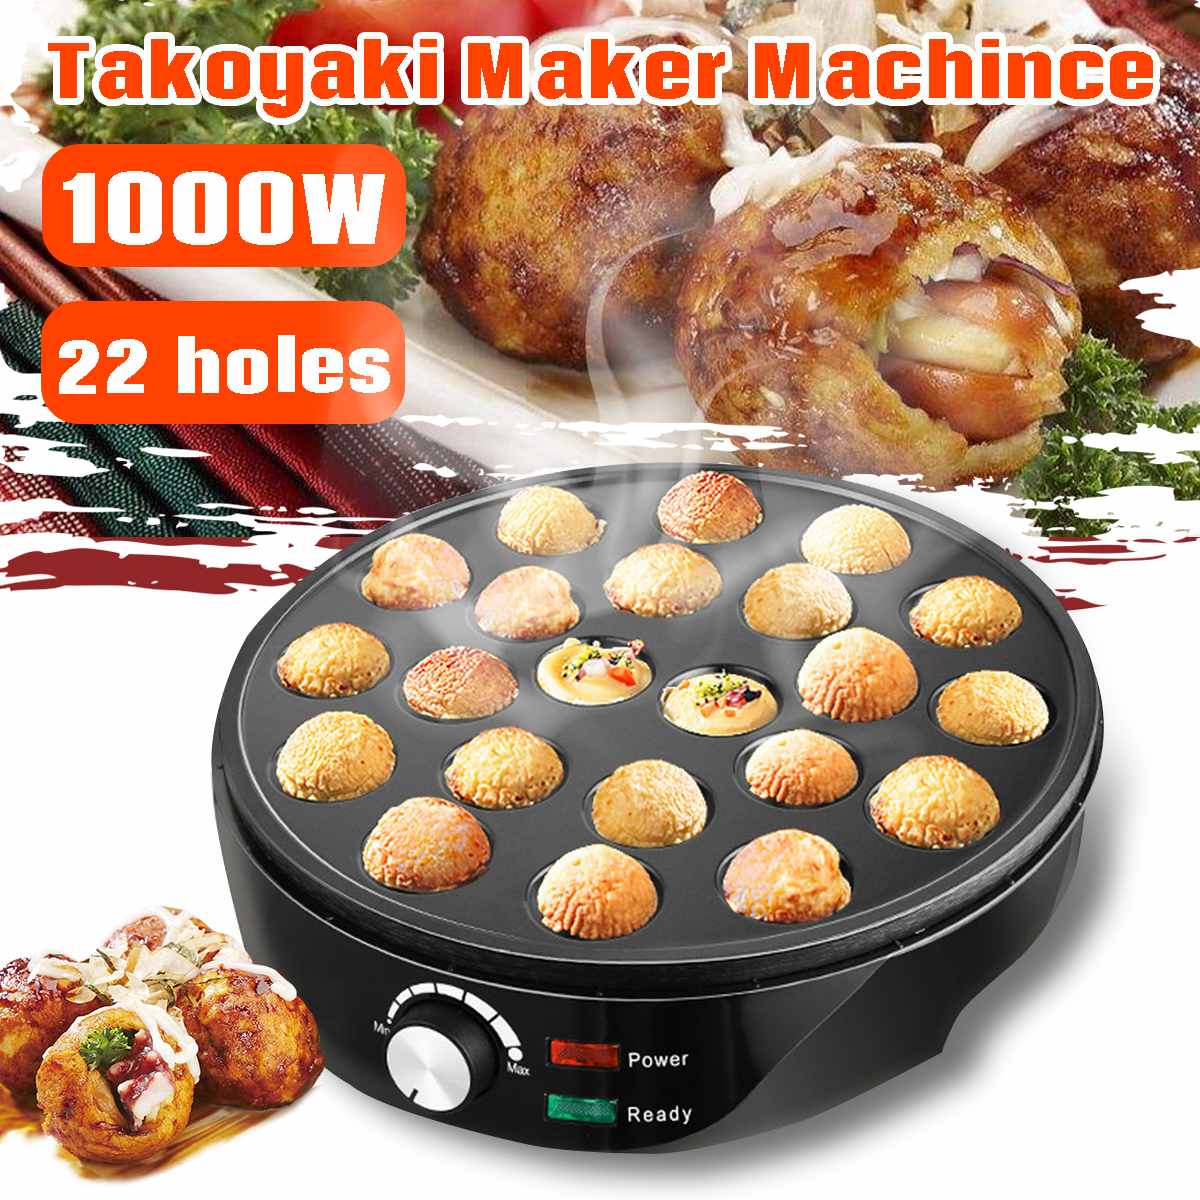 1000w 22 hulrum aluminiumslegering takoyaki pande takoyaki maker blæksprutte små kugler bagepande hjemmelaveværktøj 220-240v